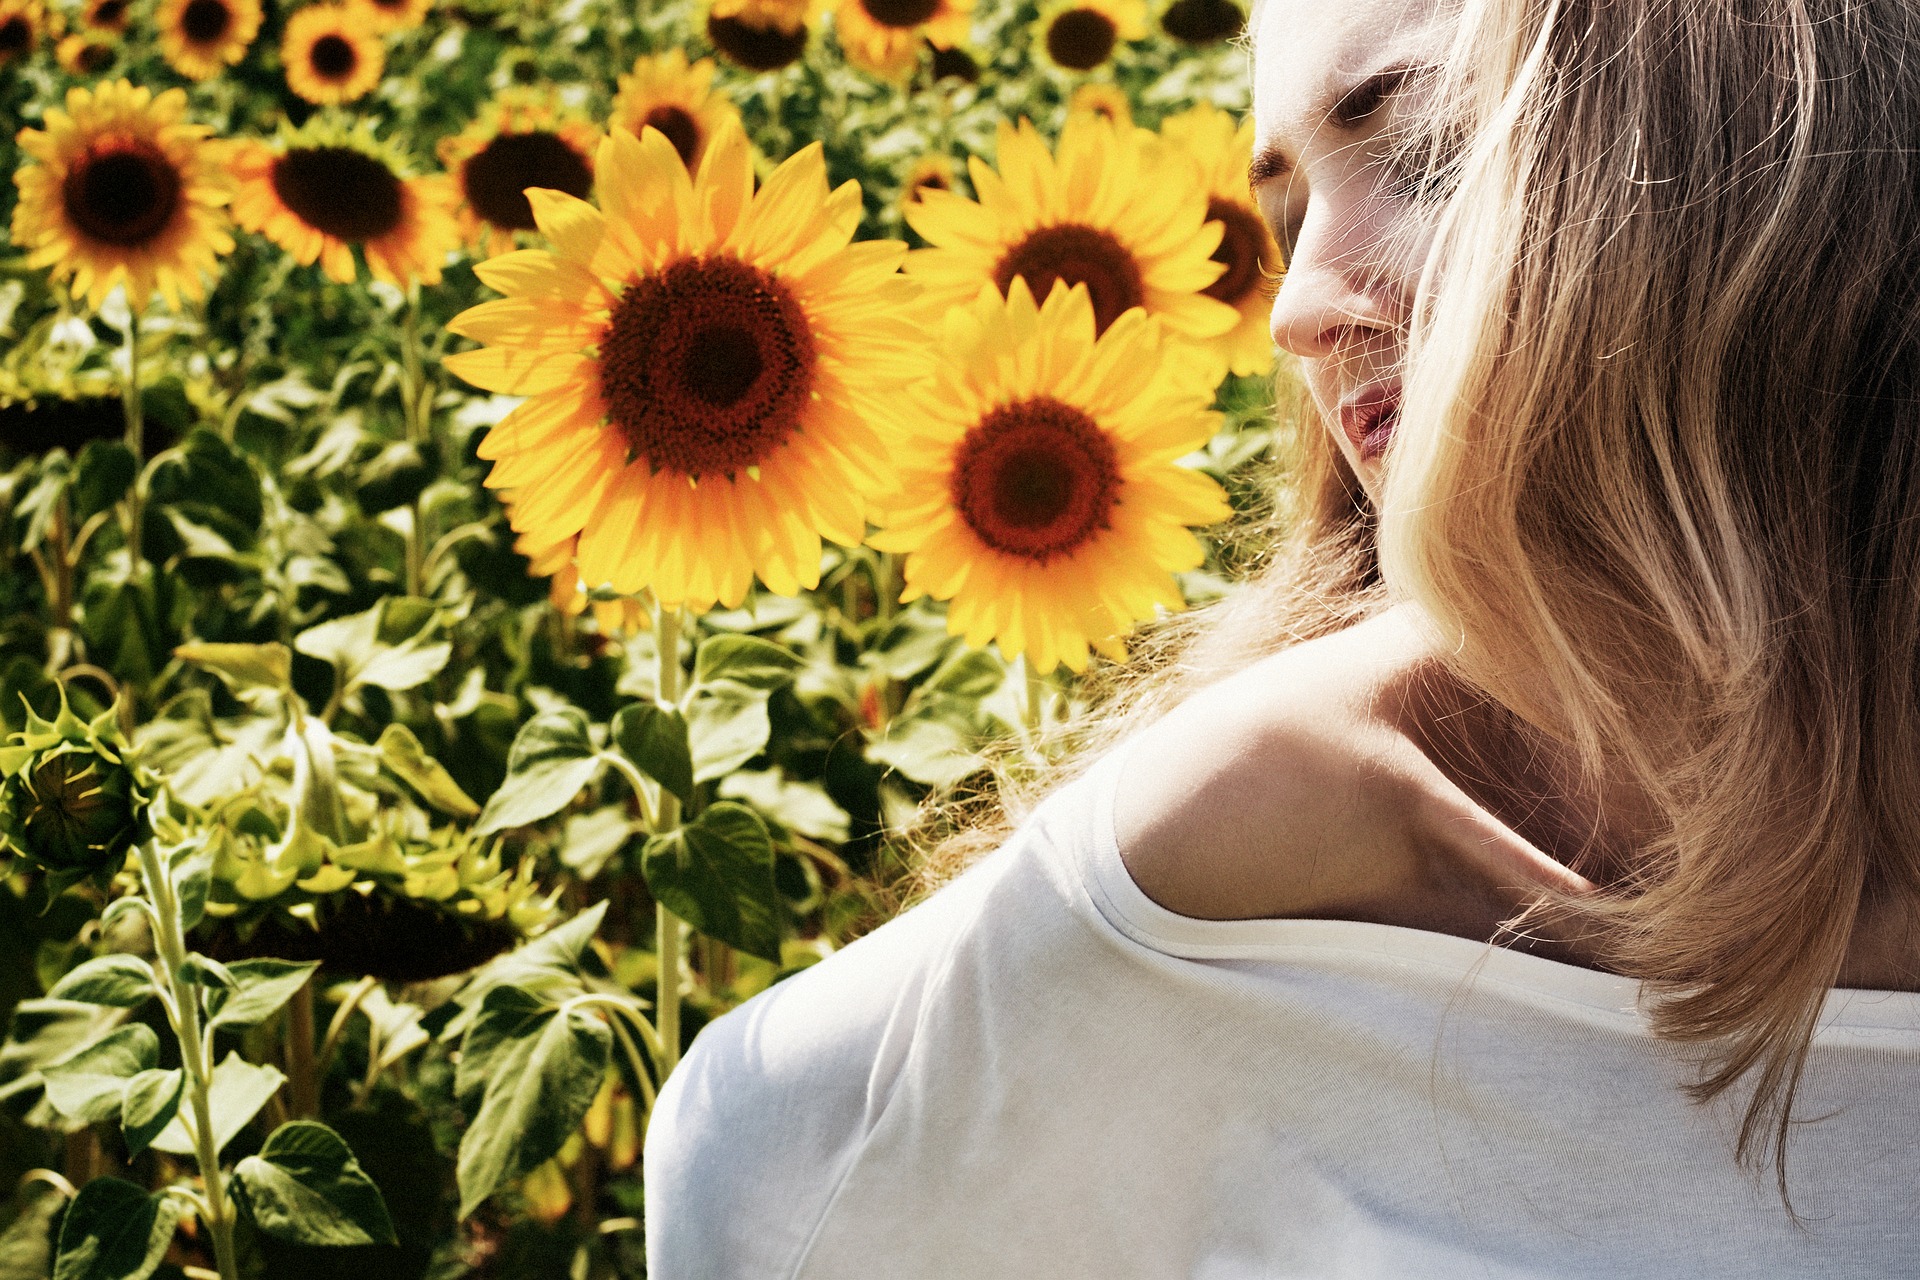 Model in the sunflower field photo